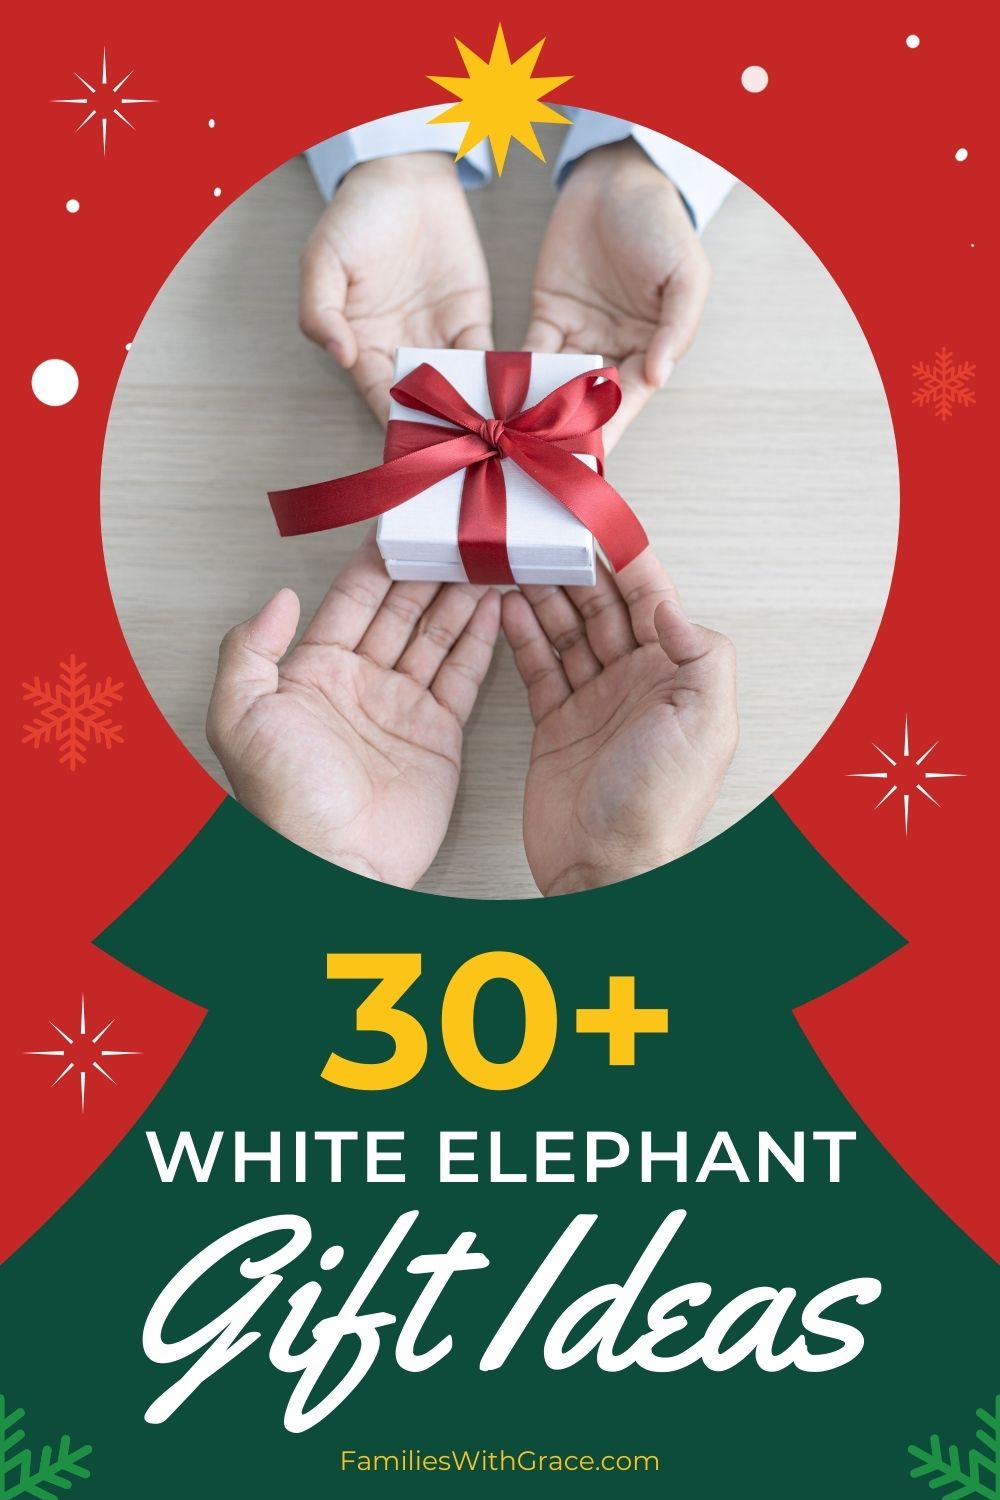 30+ of the best white elephant gift ideas under $20